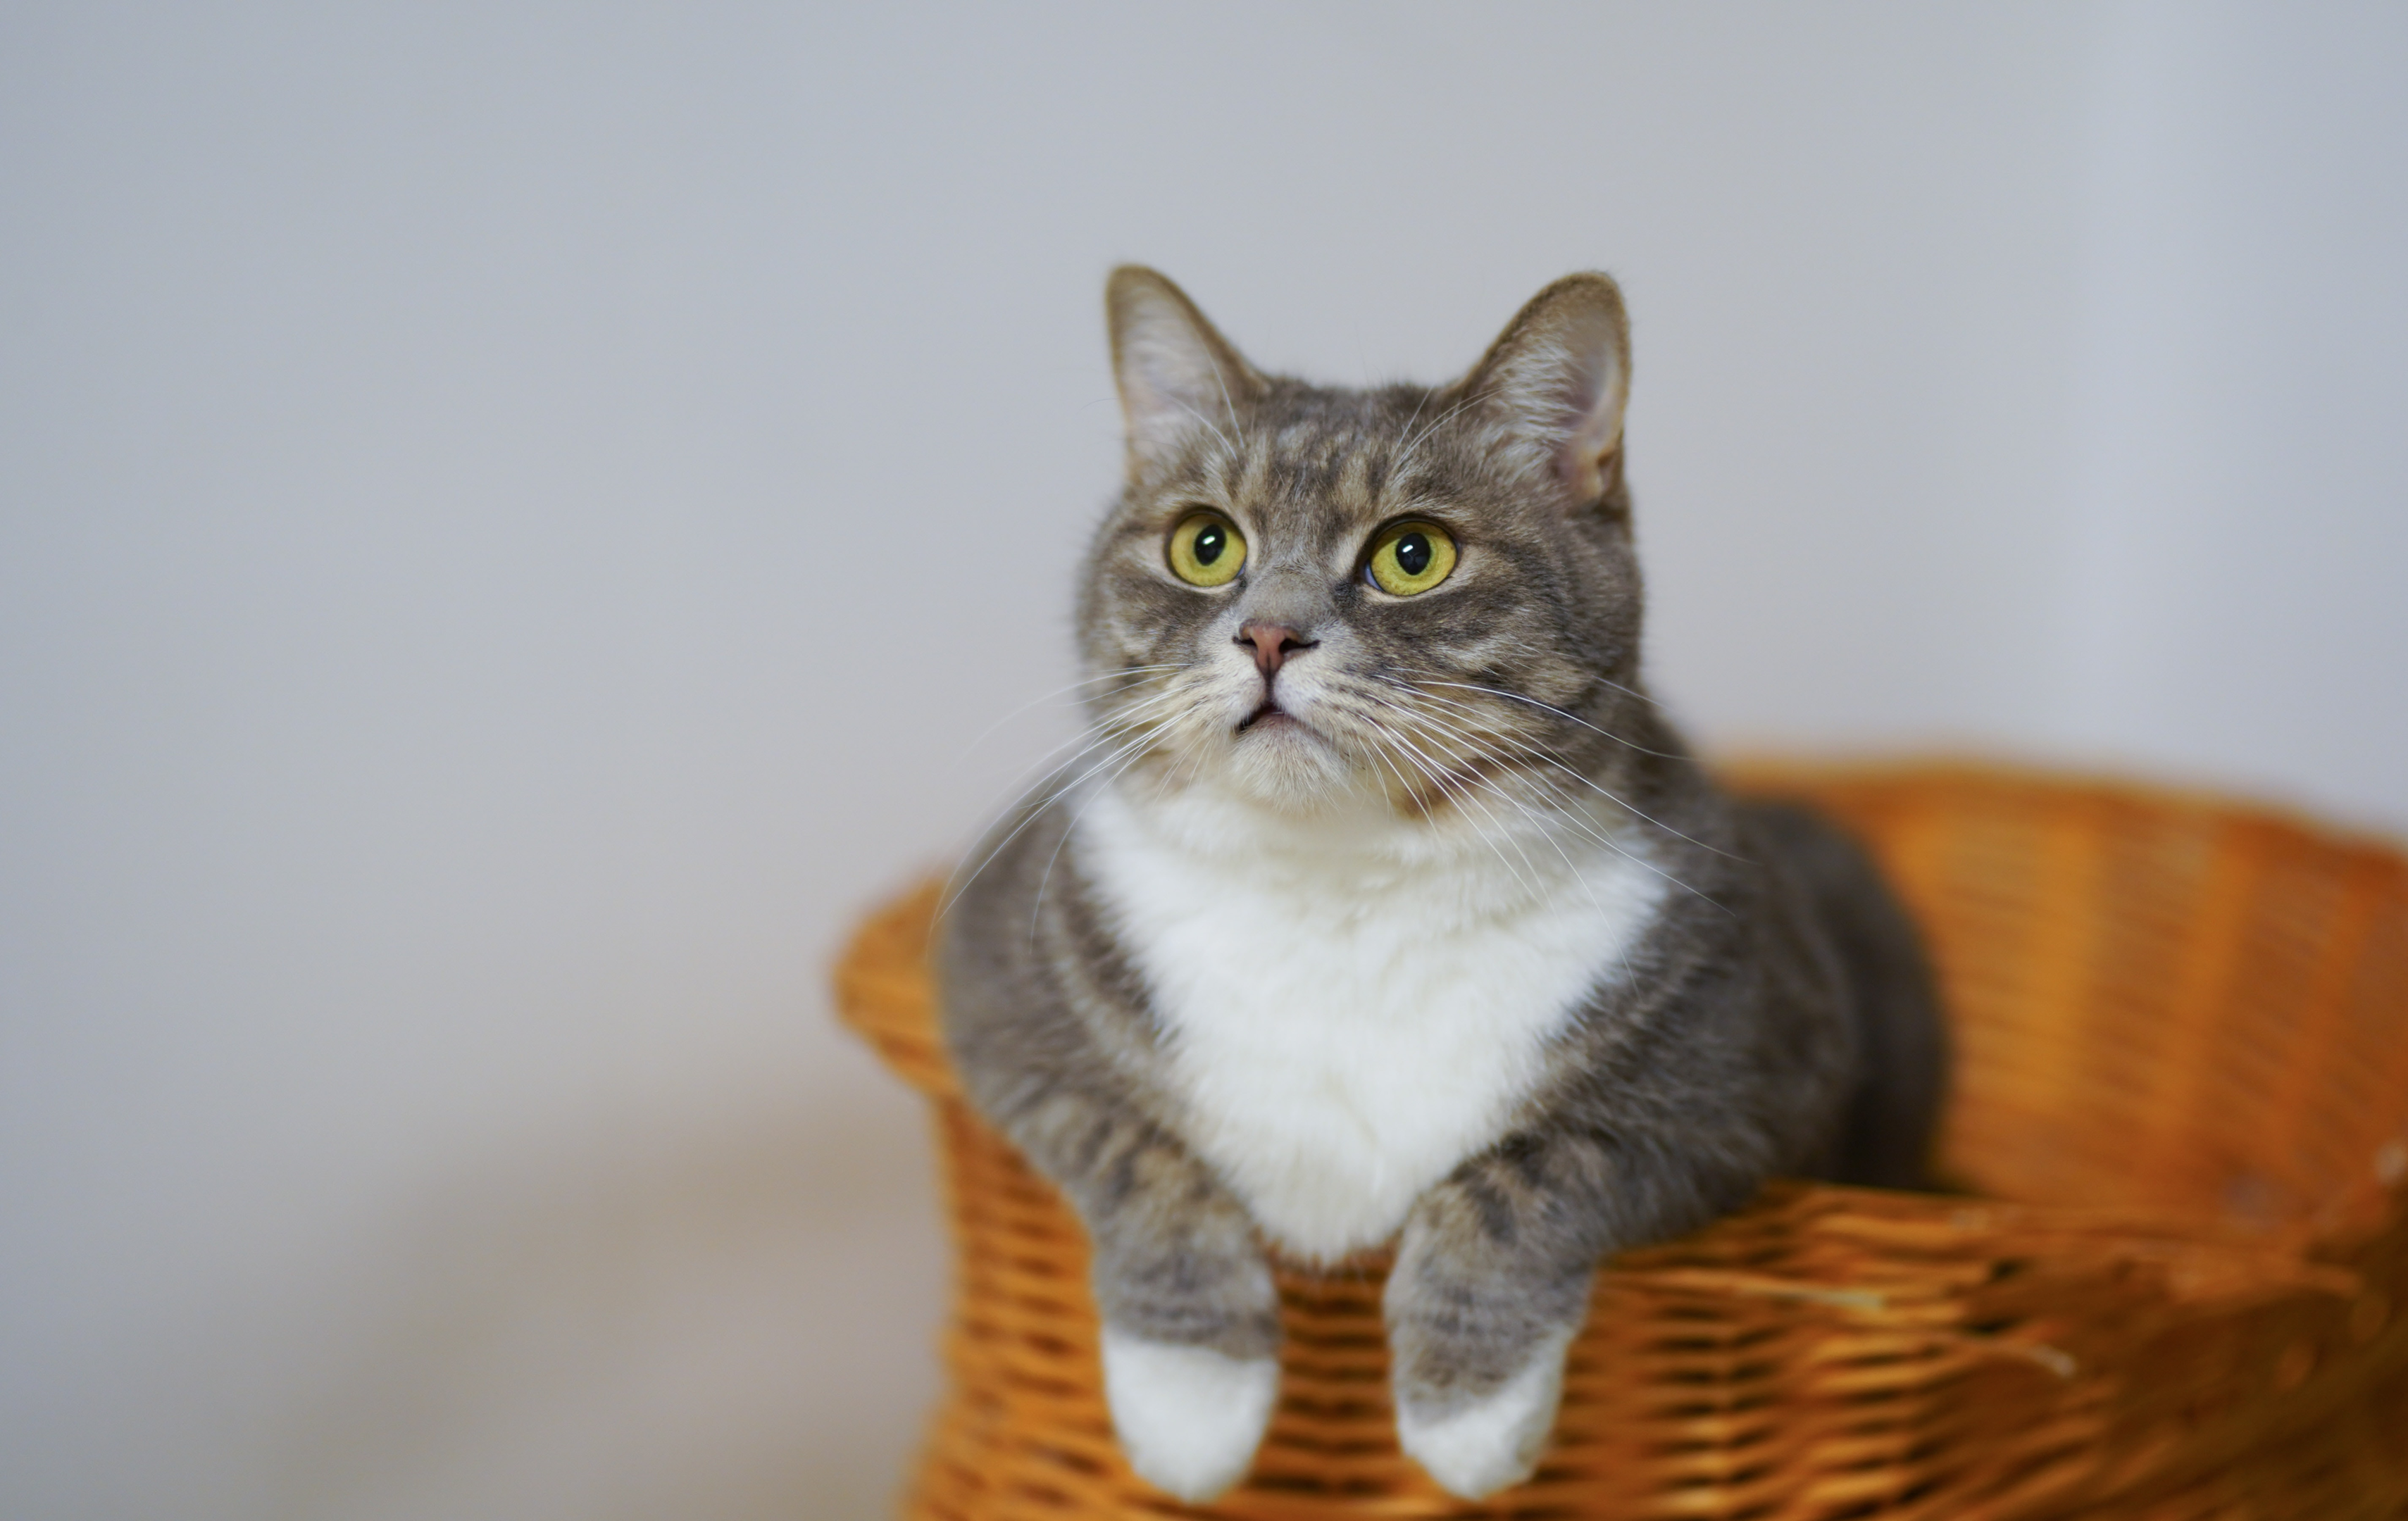 Souce: https://www.pexels.com/photo/european-shorthair-cat-on-a-woven-basket-1543793/